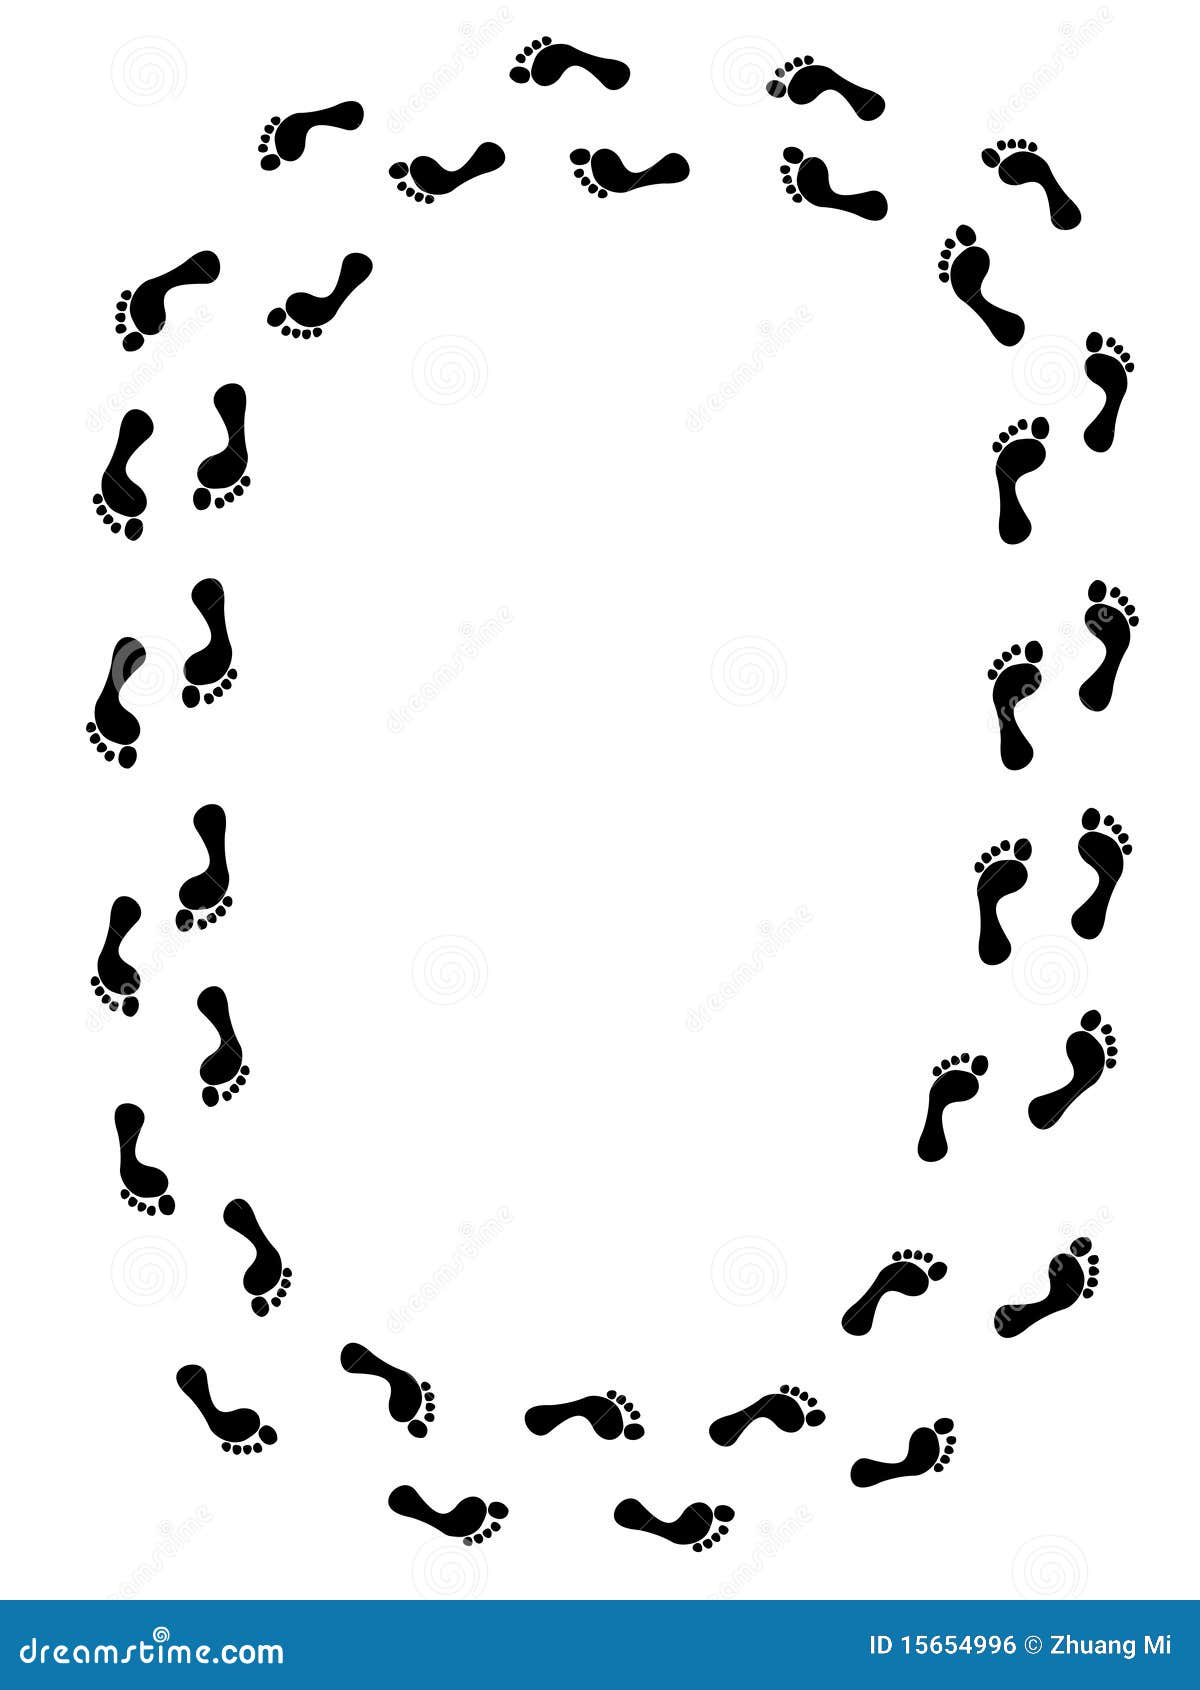 clipart human footprints - photo #35